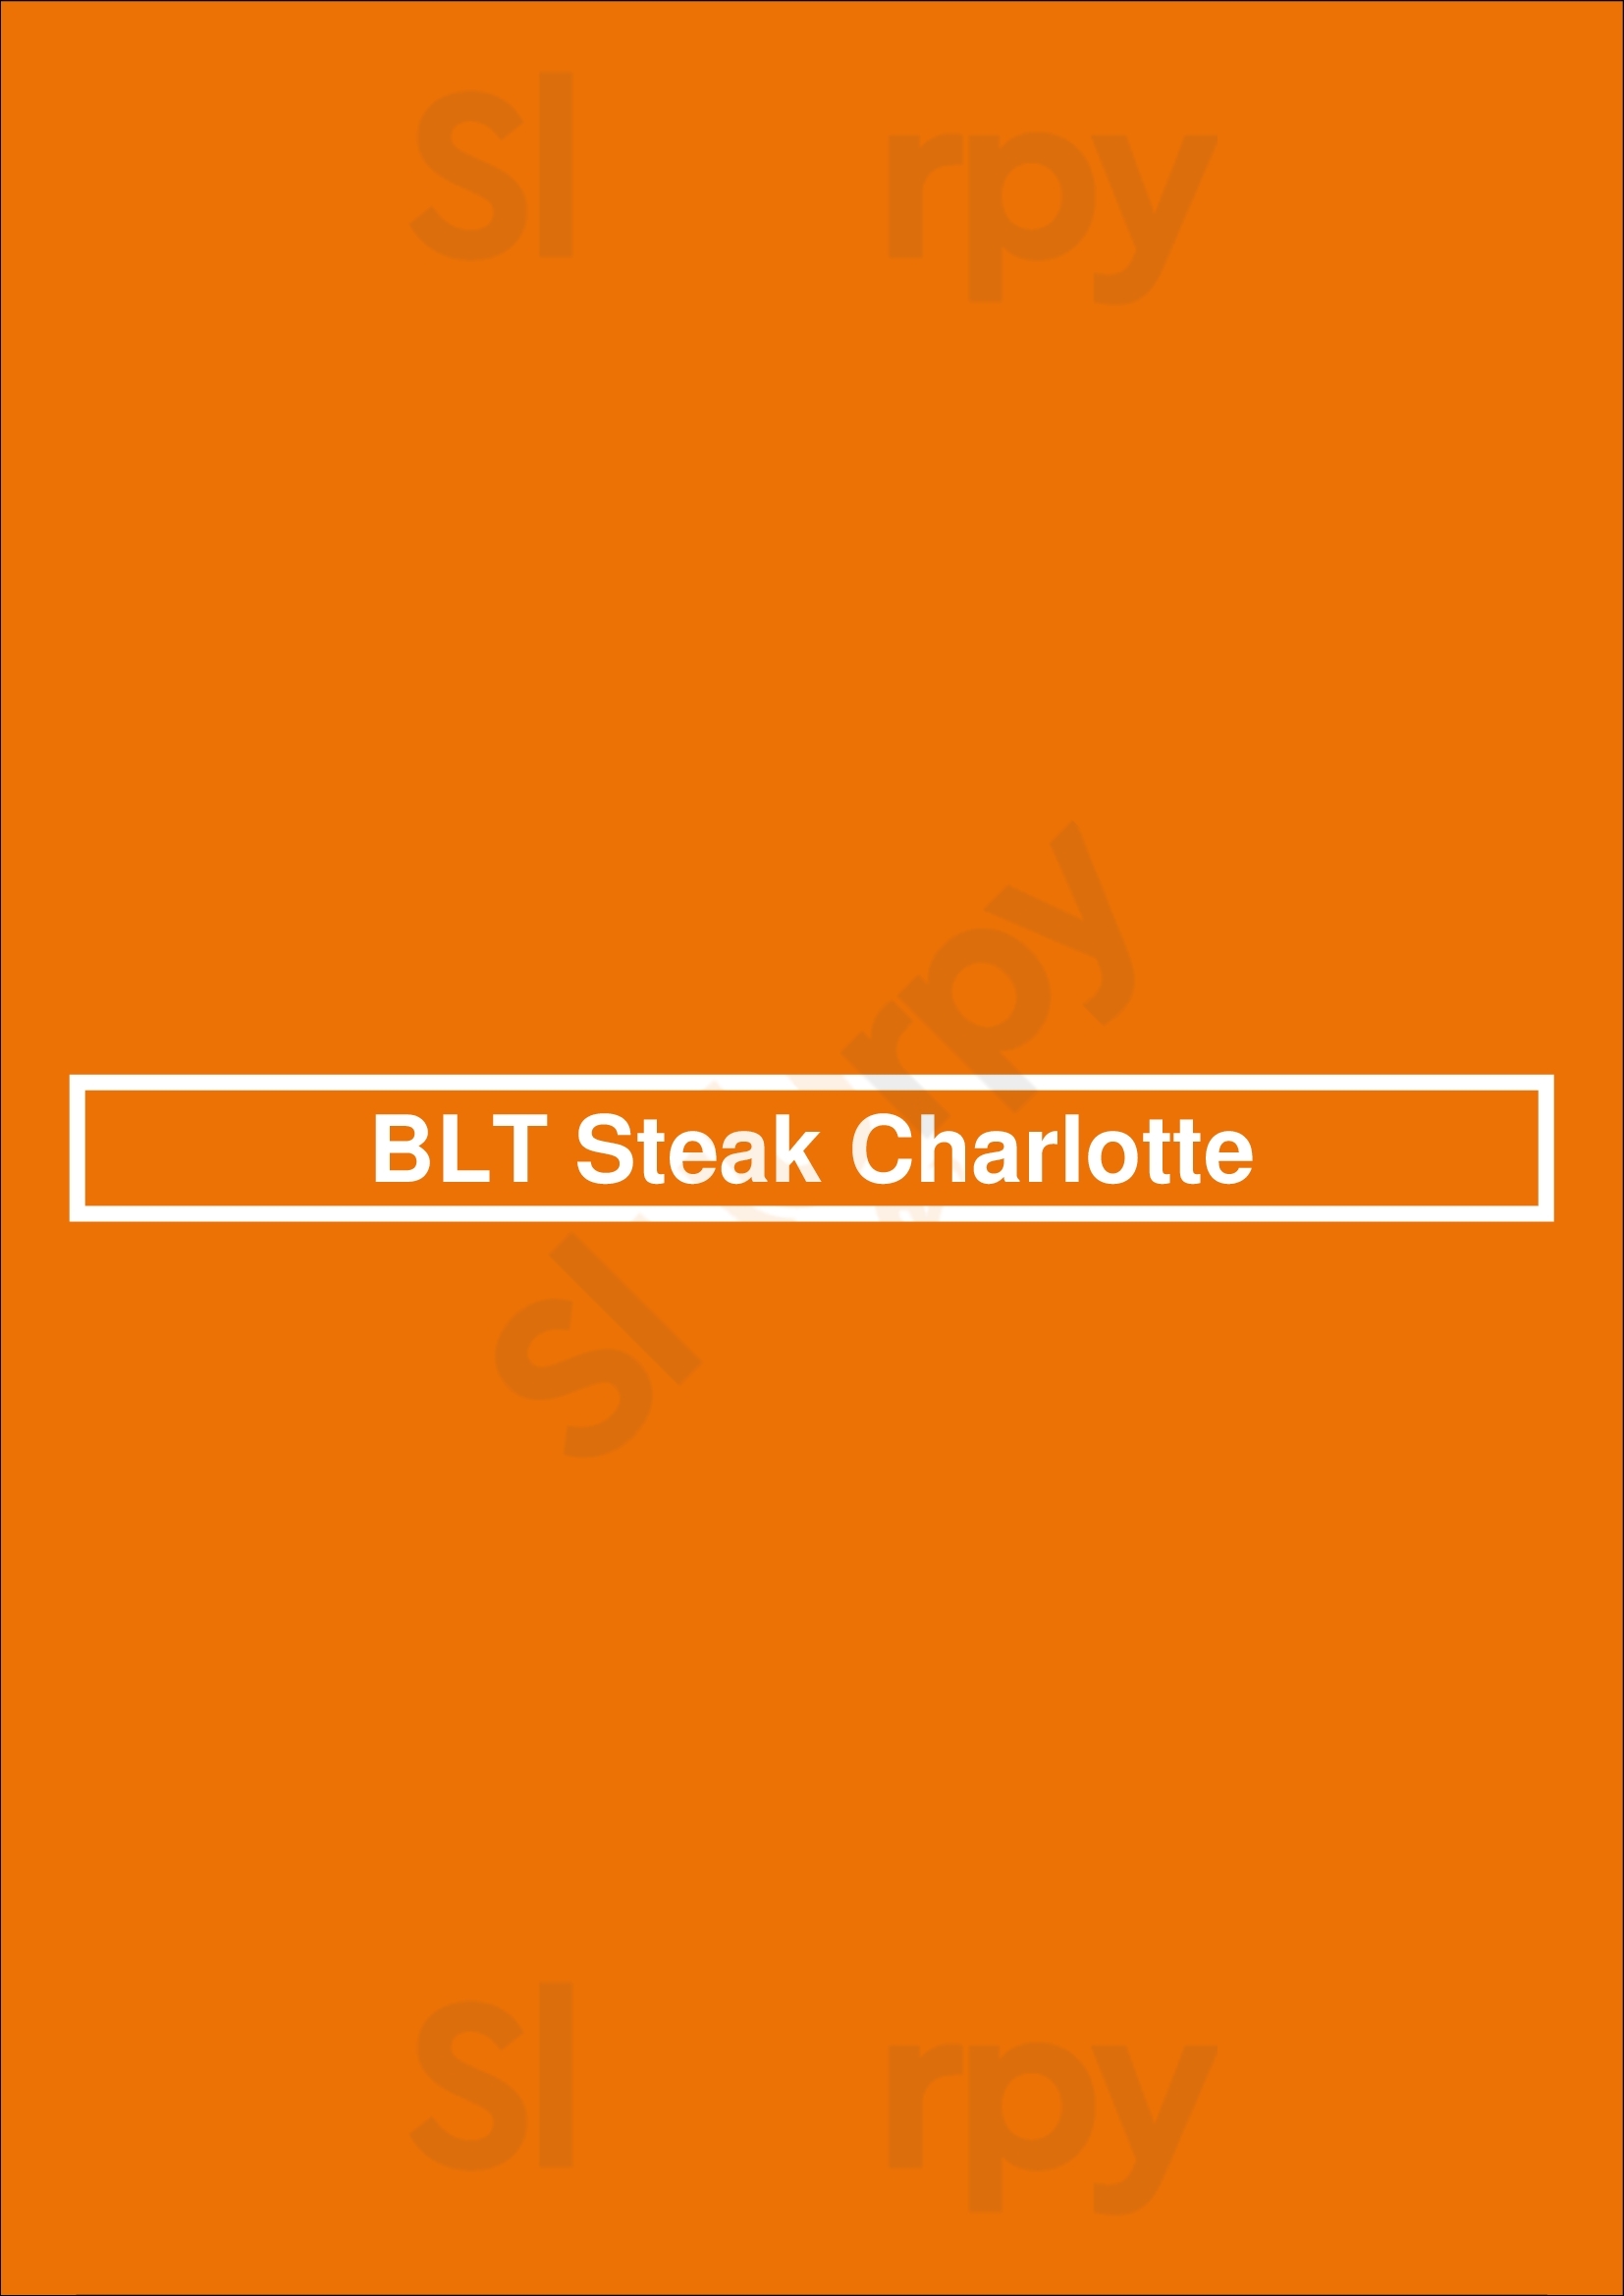 Blt Steak Charlotte Charlotte Menu - 1